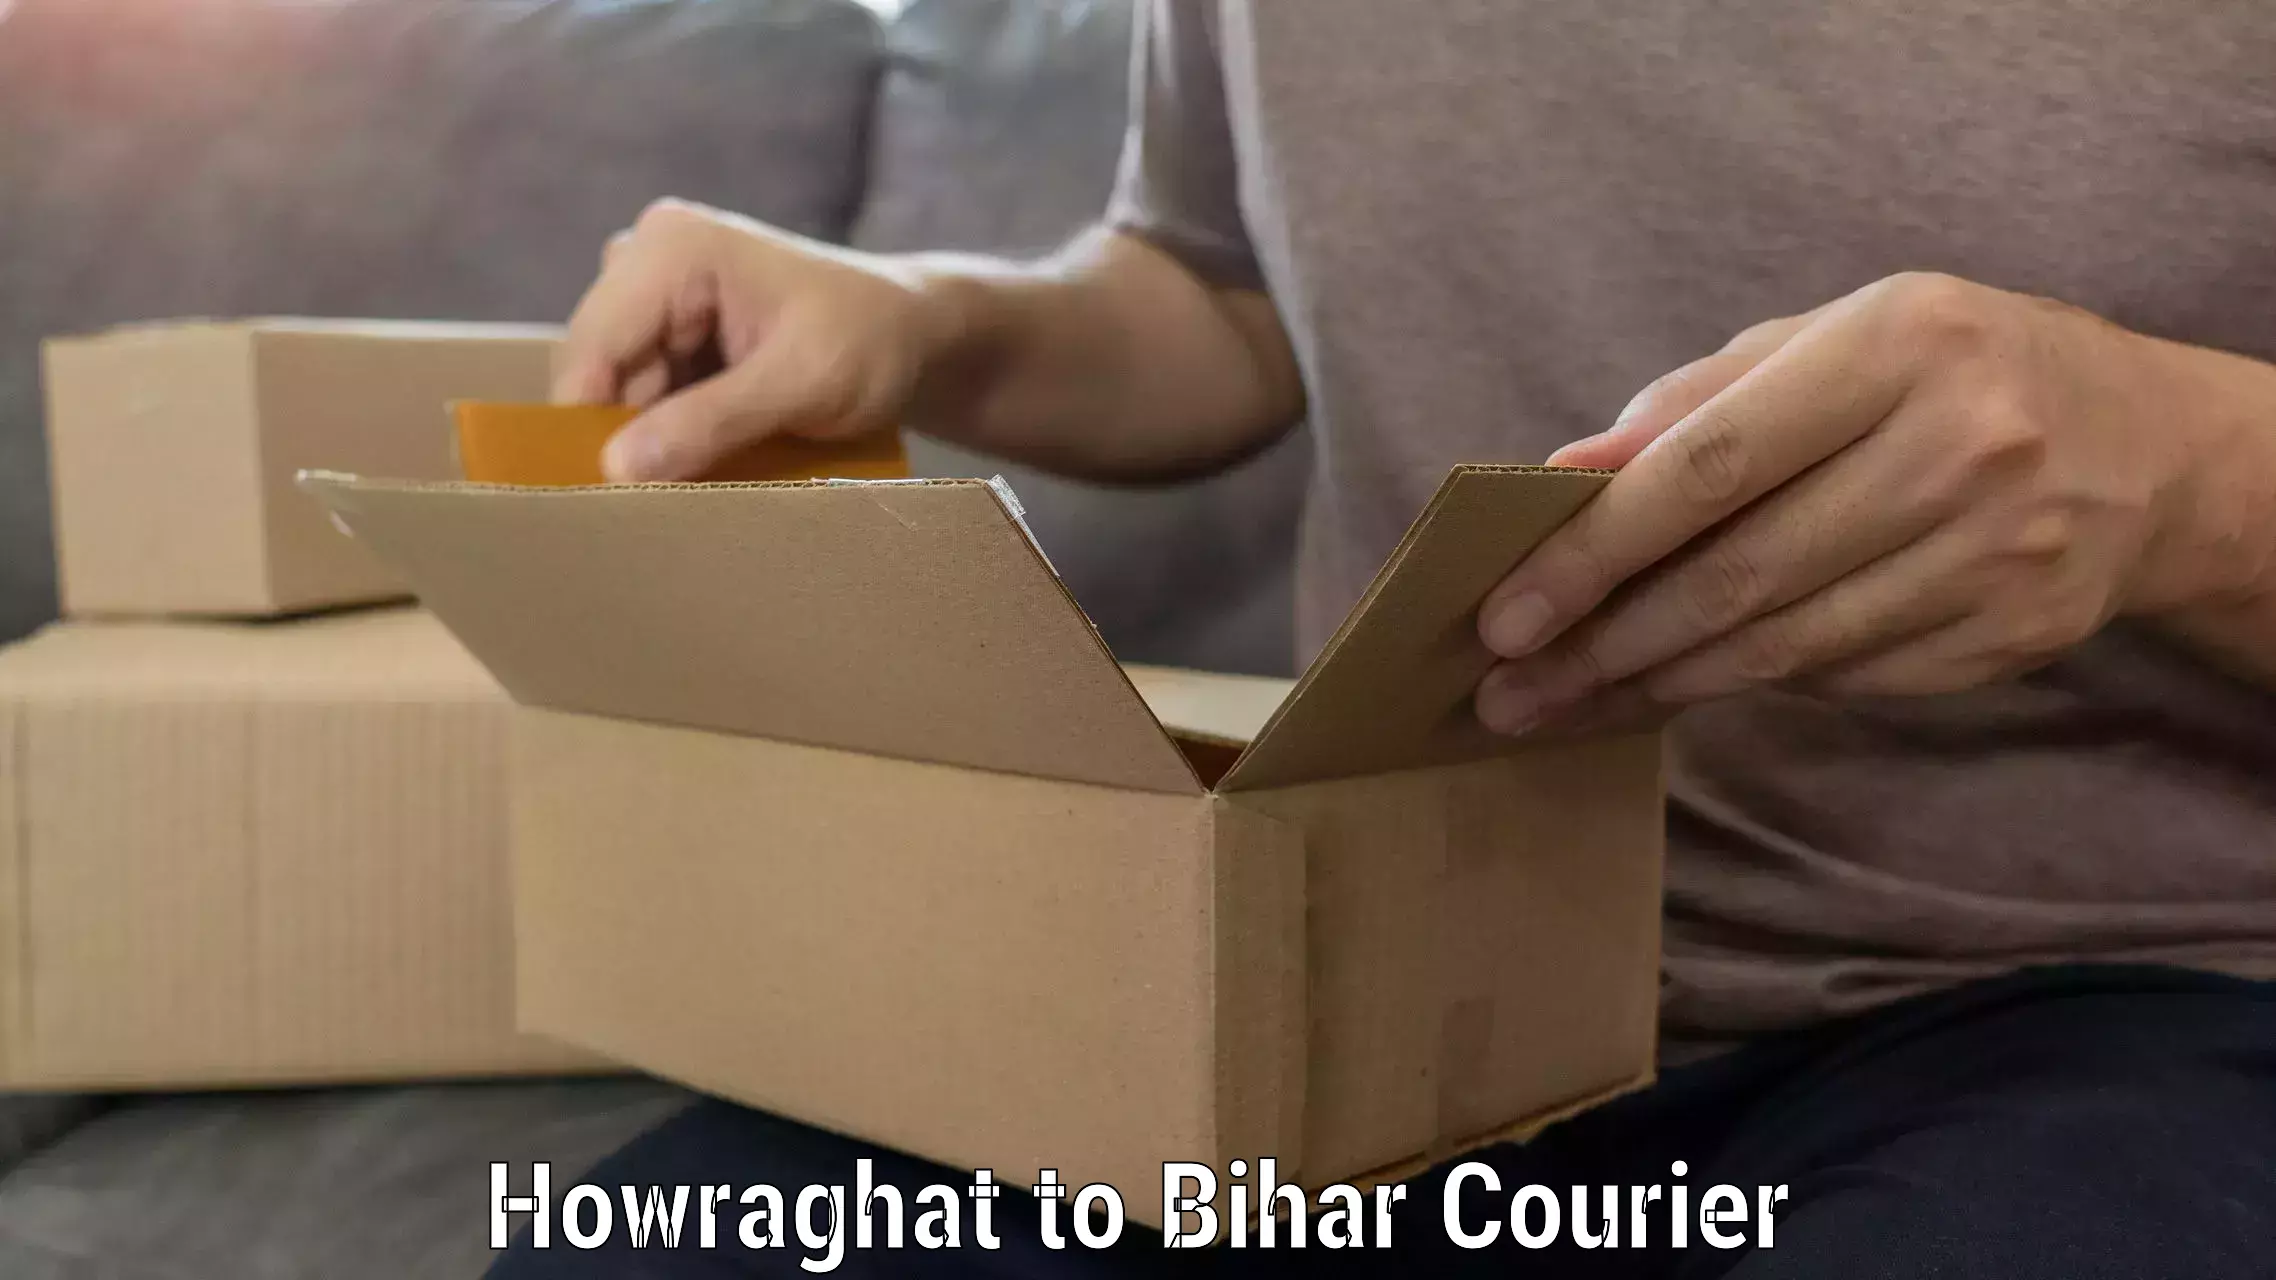 Household goods transport service Howraghat to Bihar